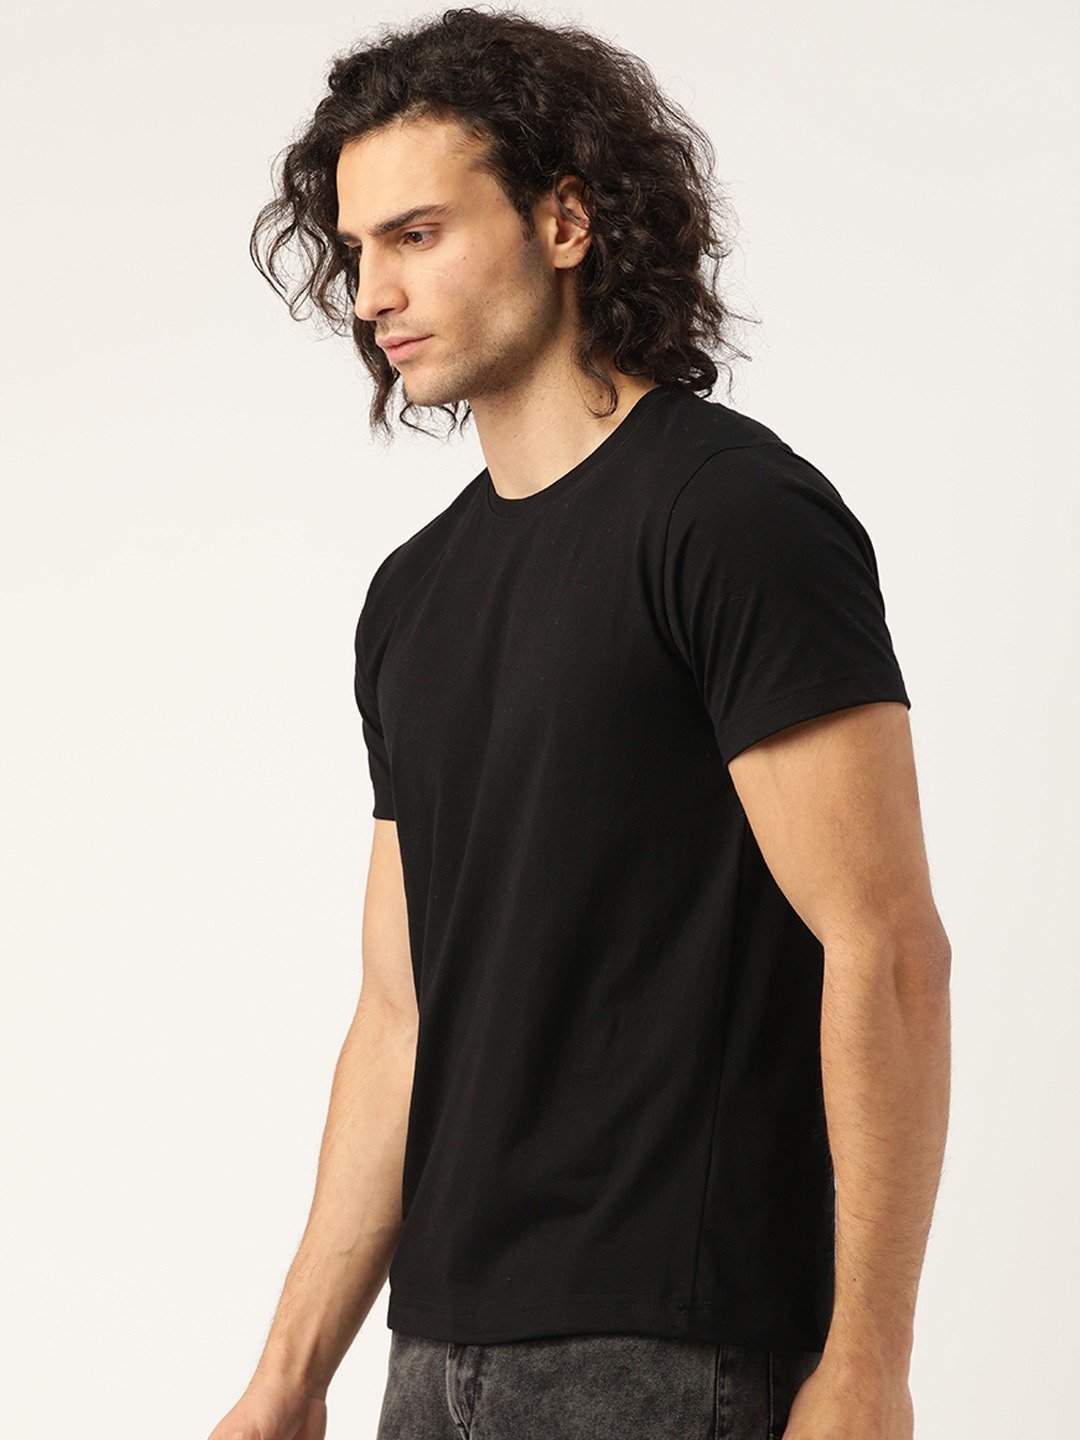 HinglishWear Men's Plain T-Shirt - Essential fashion staple for men's wardrobe. Shop now at www.hinglishwear.com.